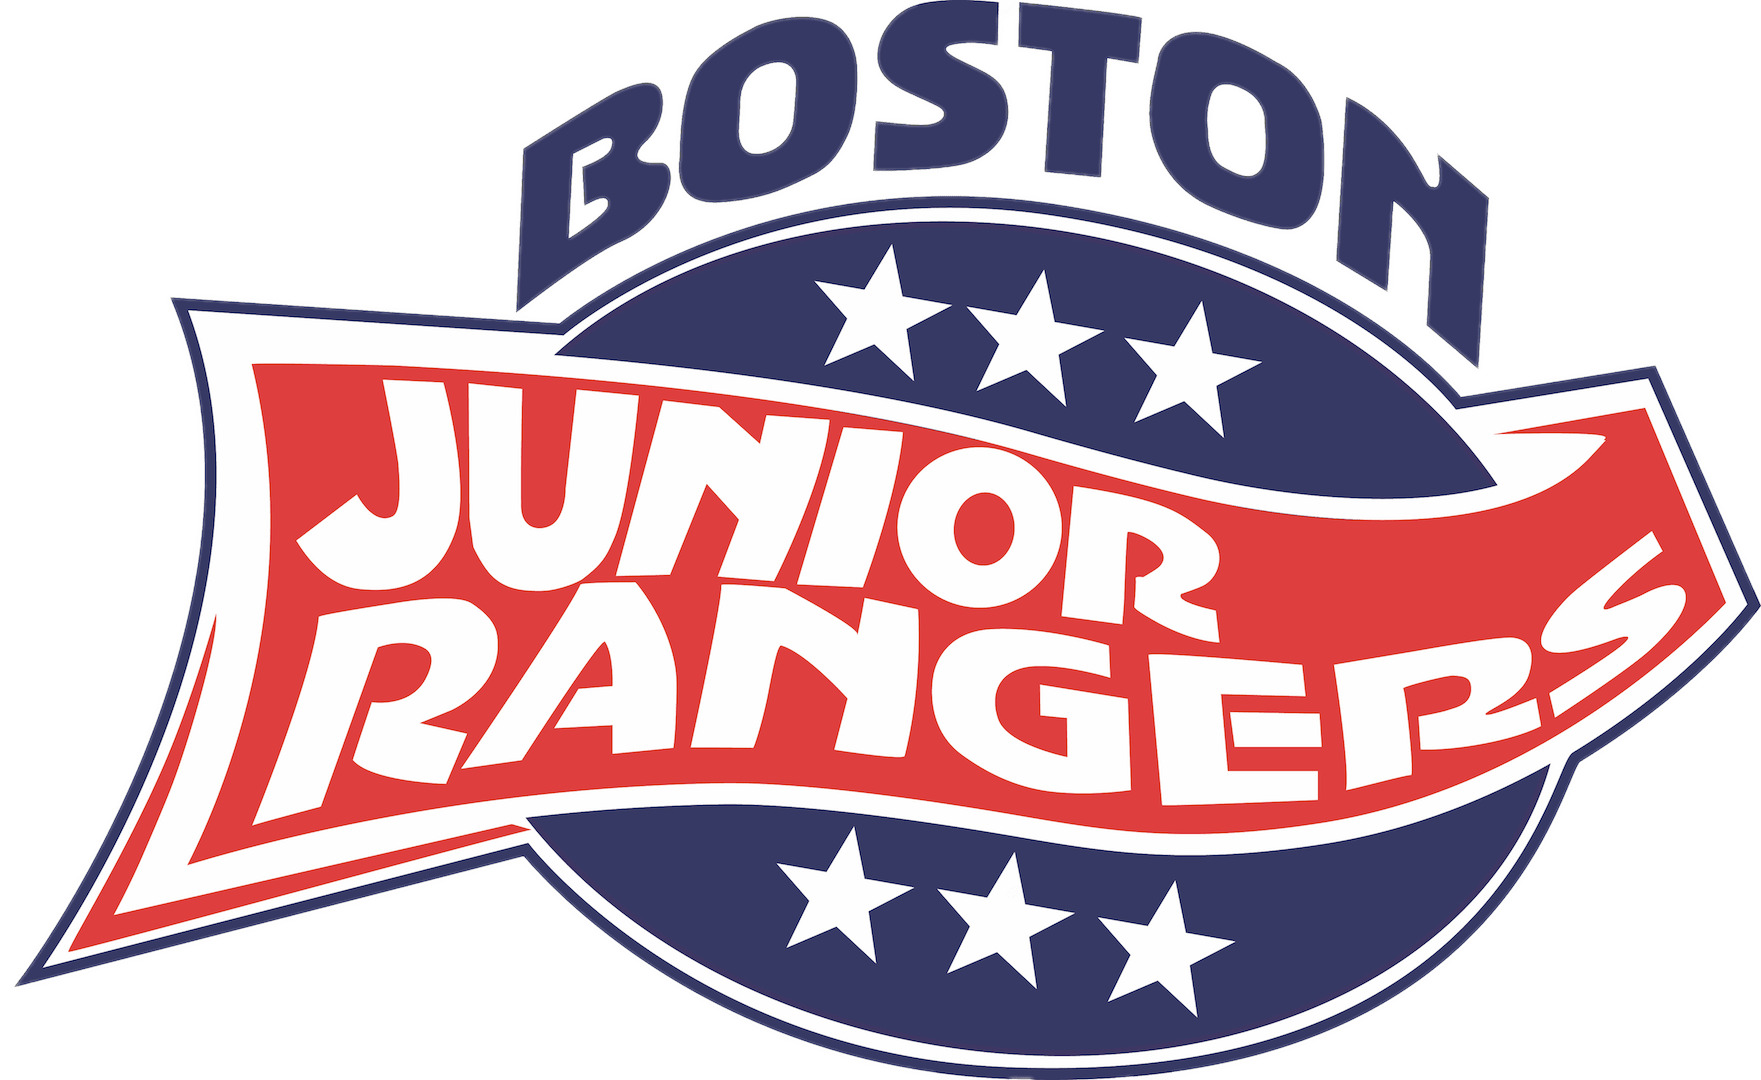 Boston Junior Rangers Logo png icons